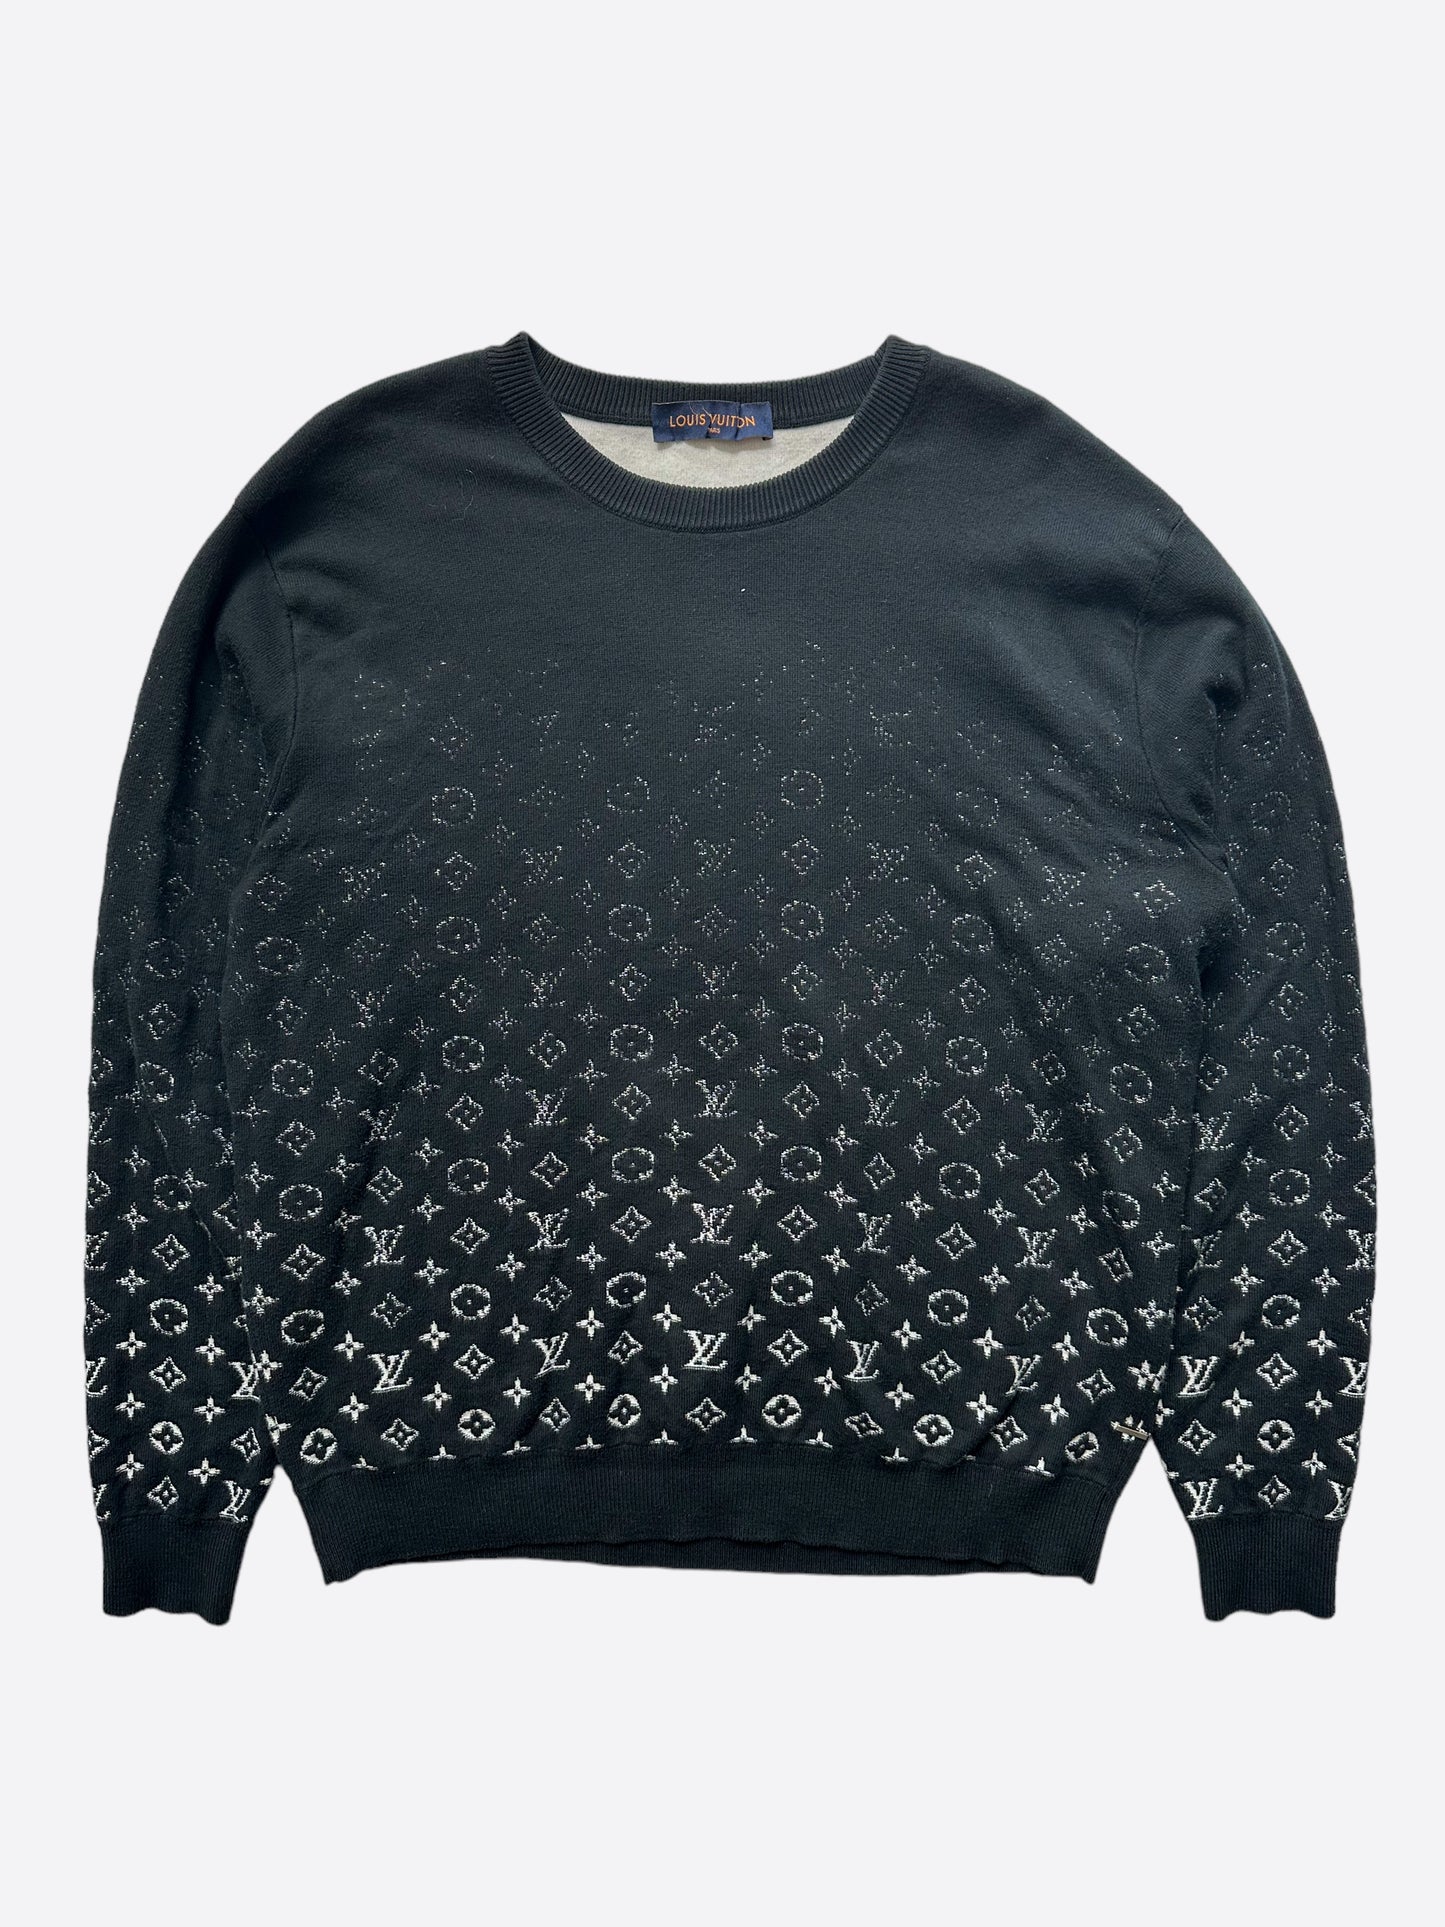 Sweater louis vuitton monogram sweatshirt